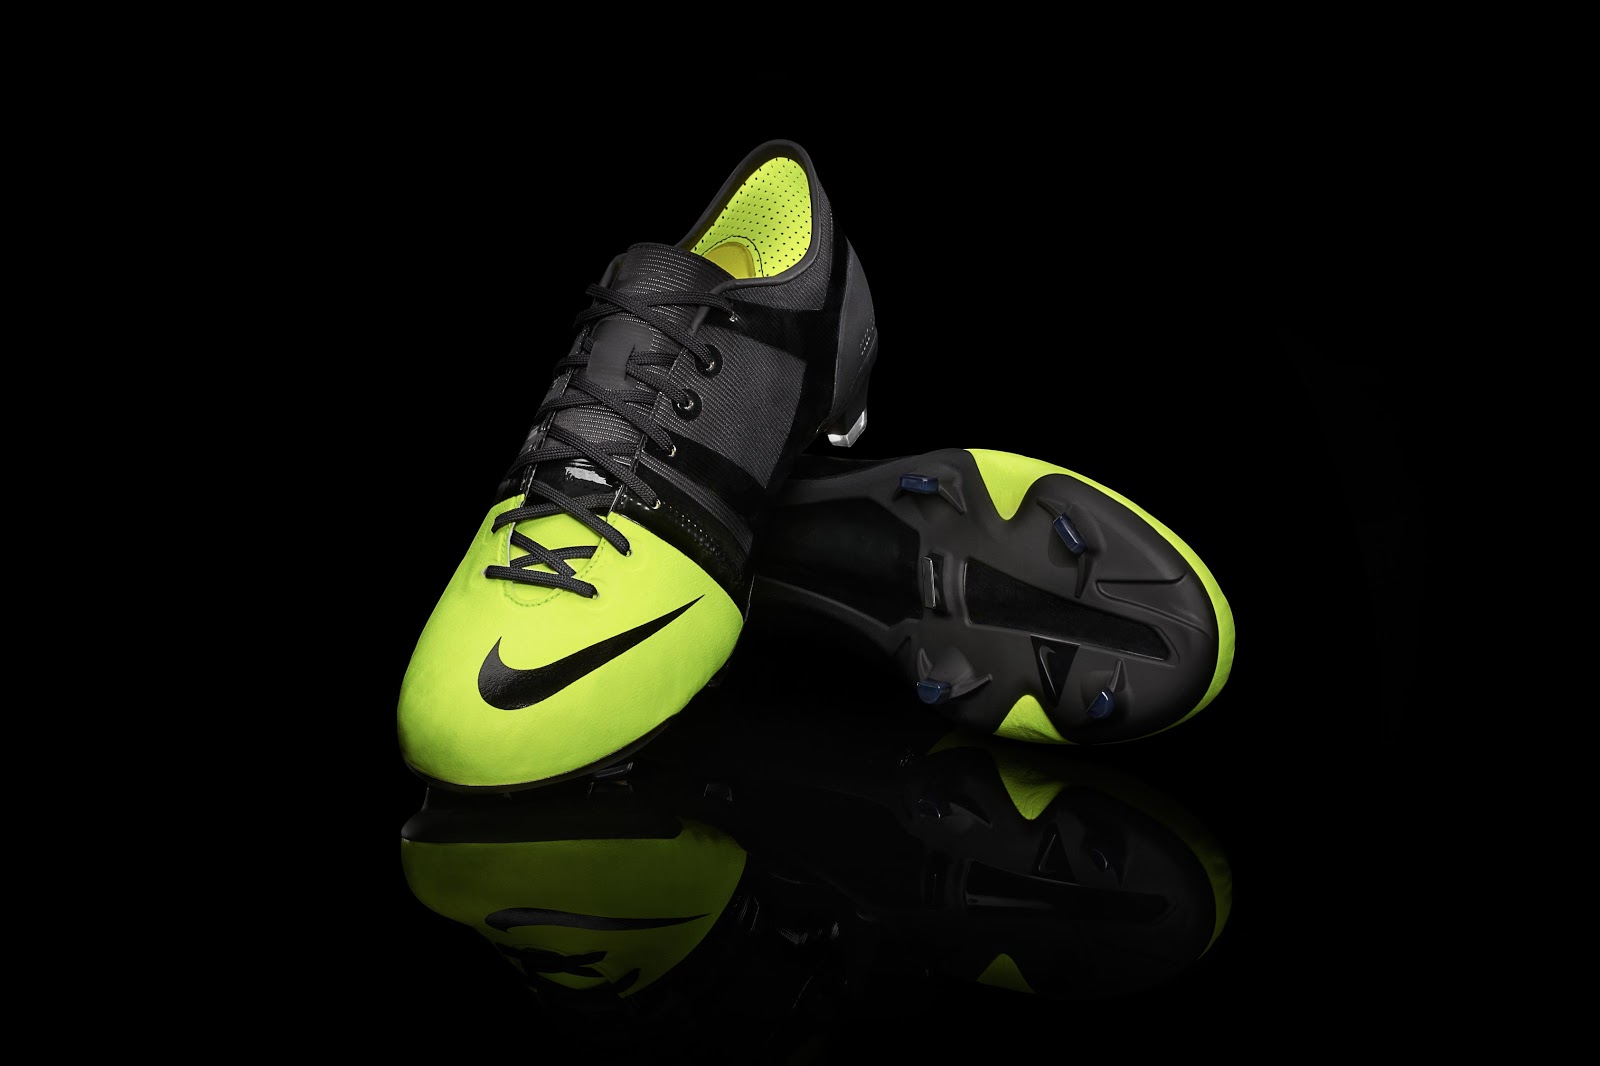 Pebish Negociar imitar Original Nike GS 2012 Football Boots - In Detail - Footy Headlines